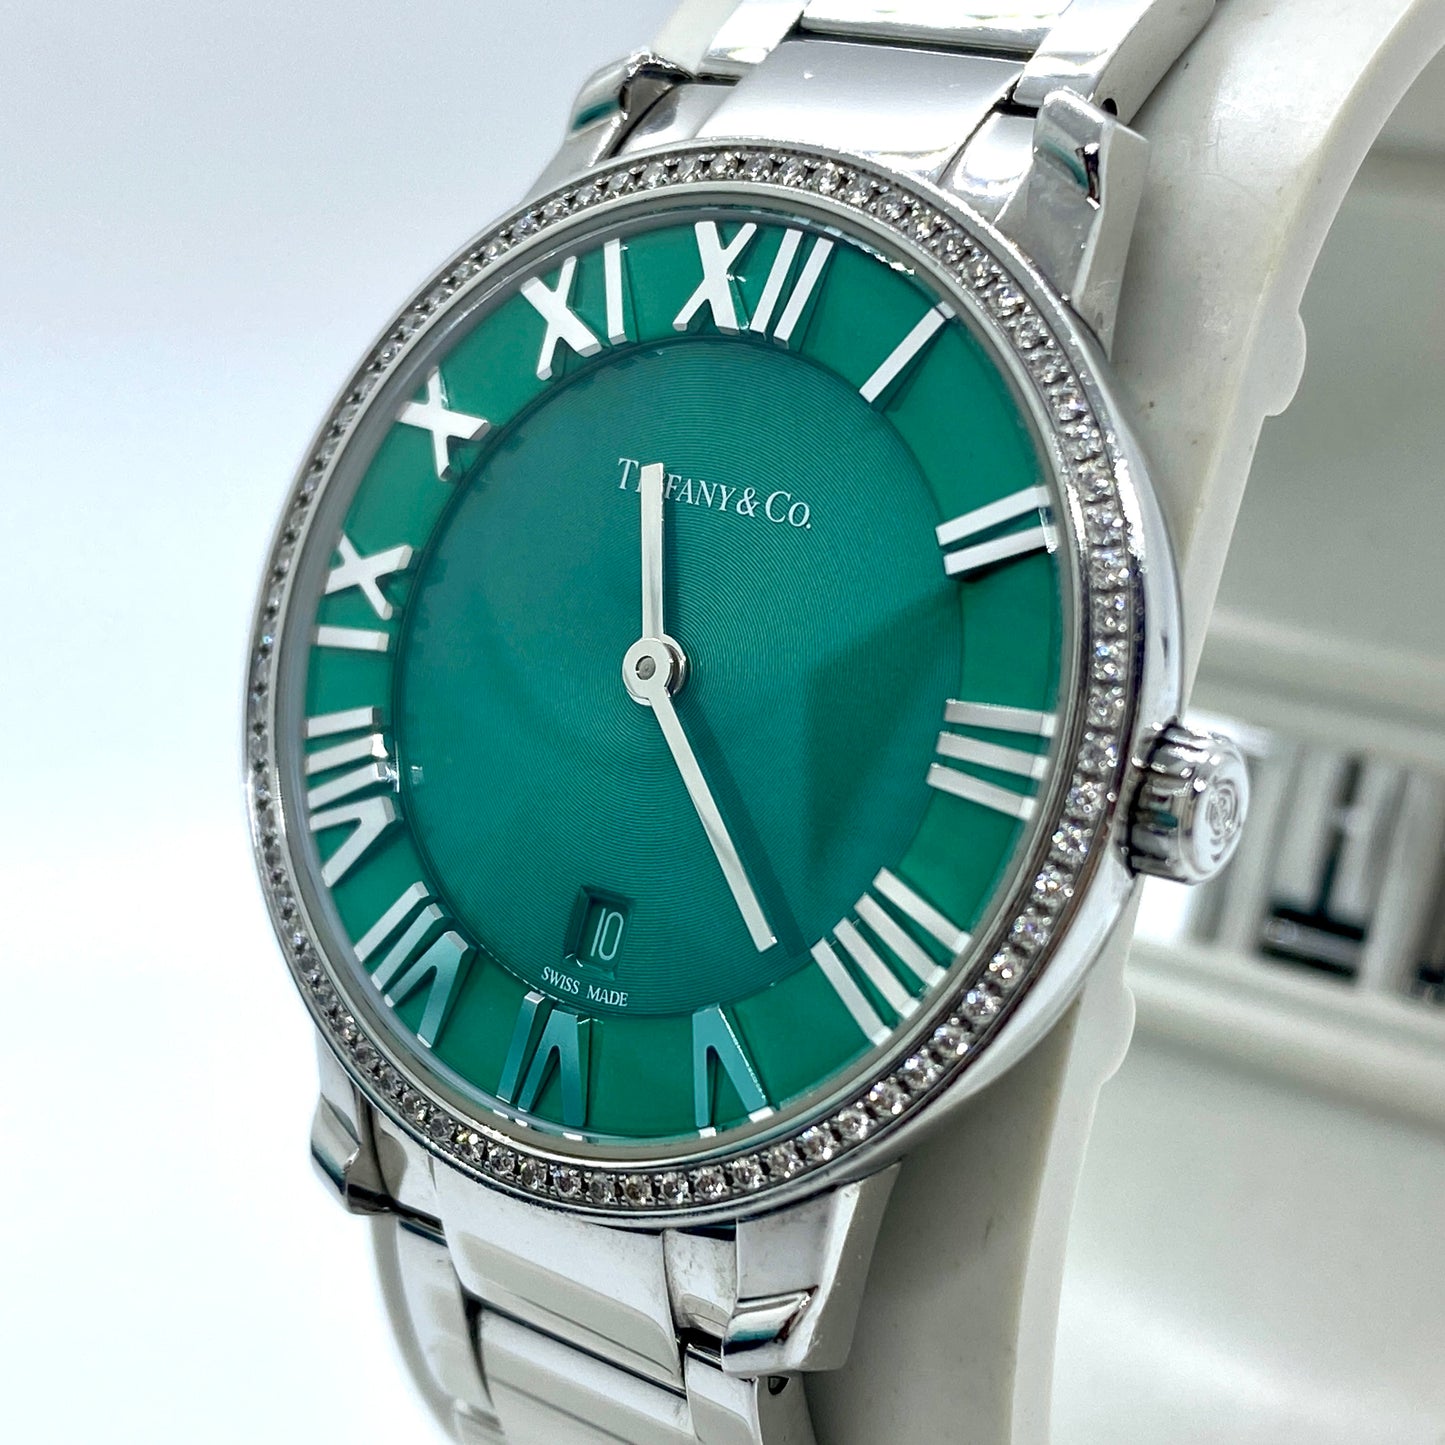 Tiffany & Co 2-hand watch